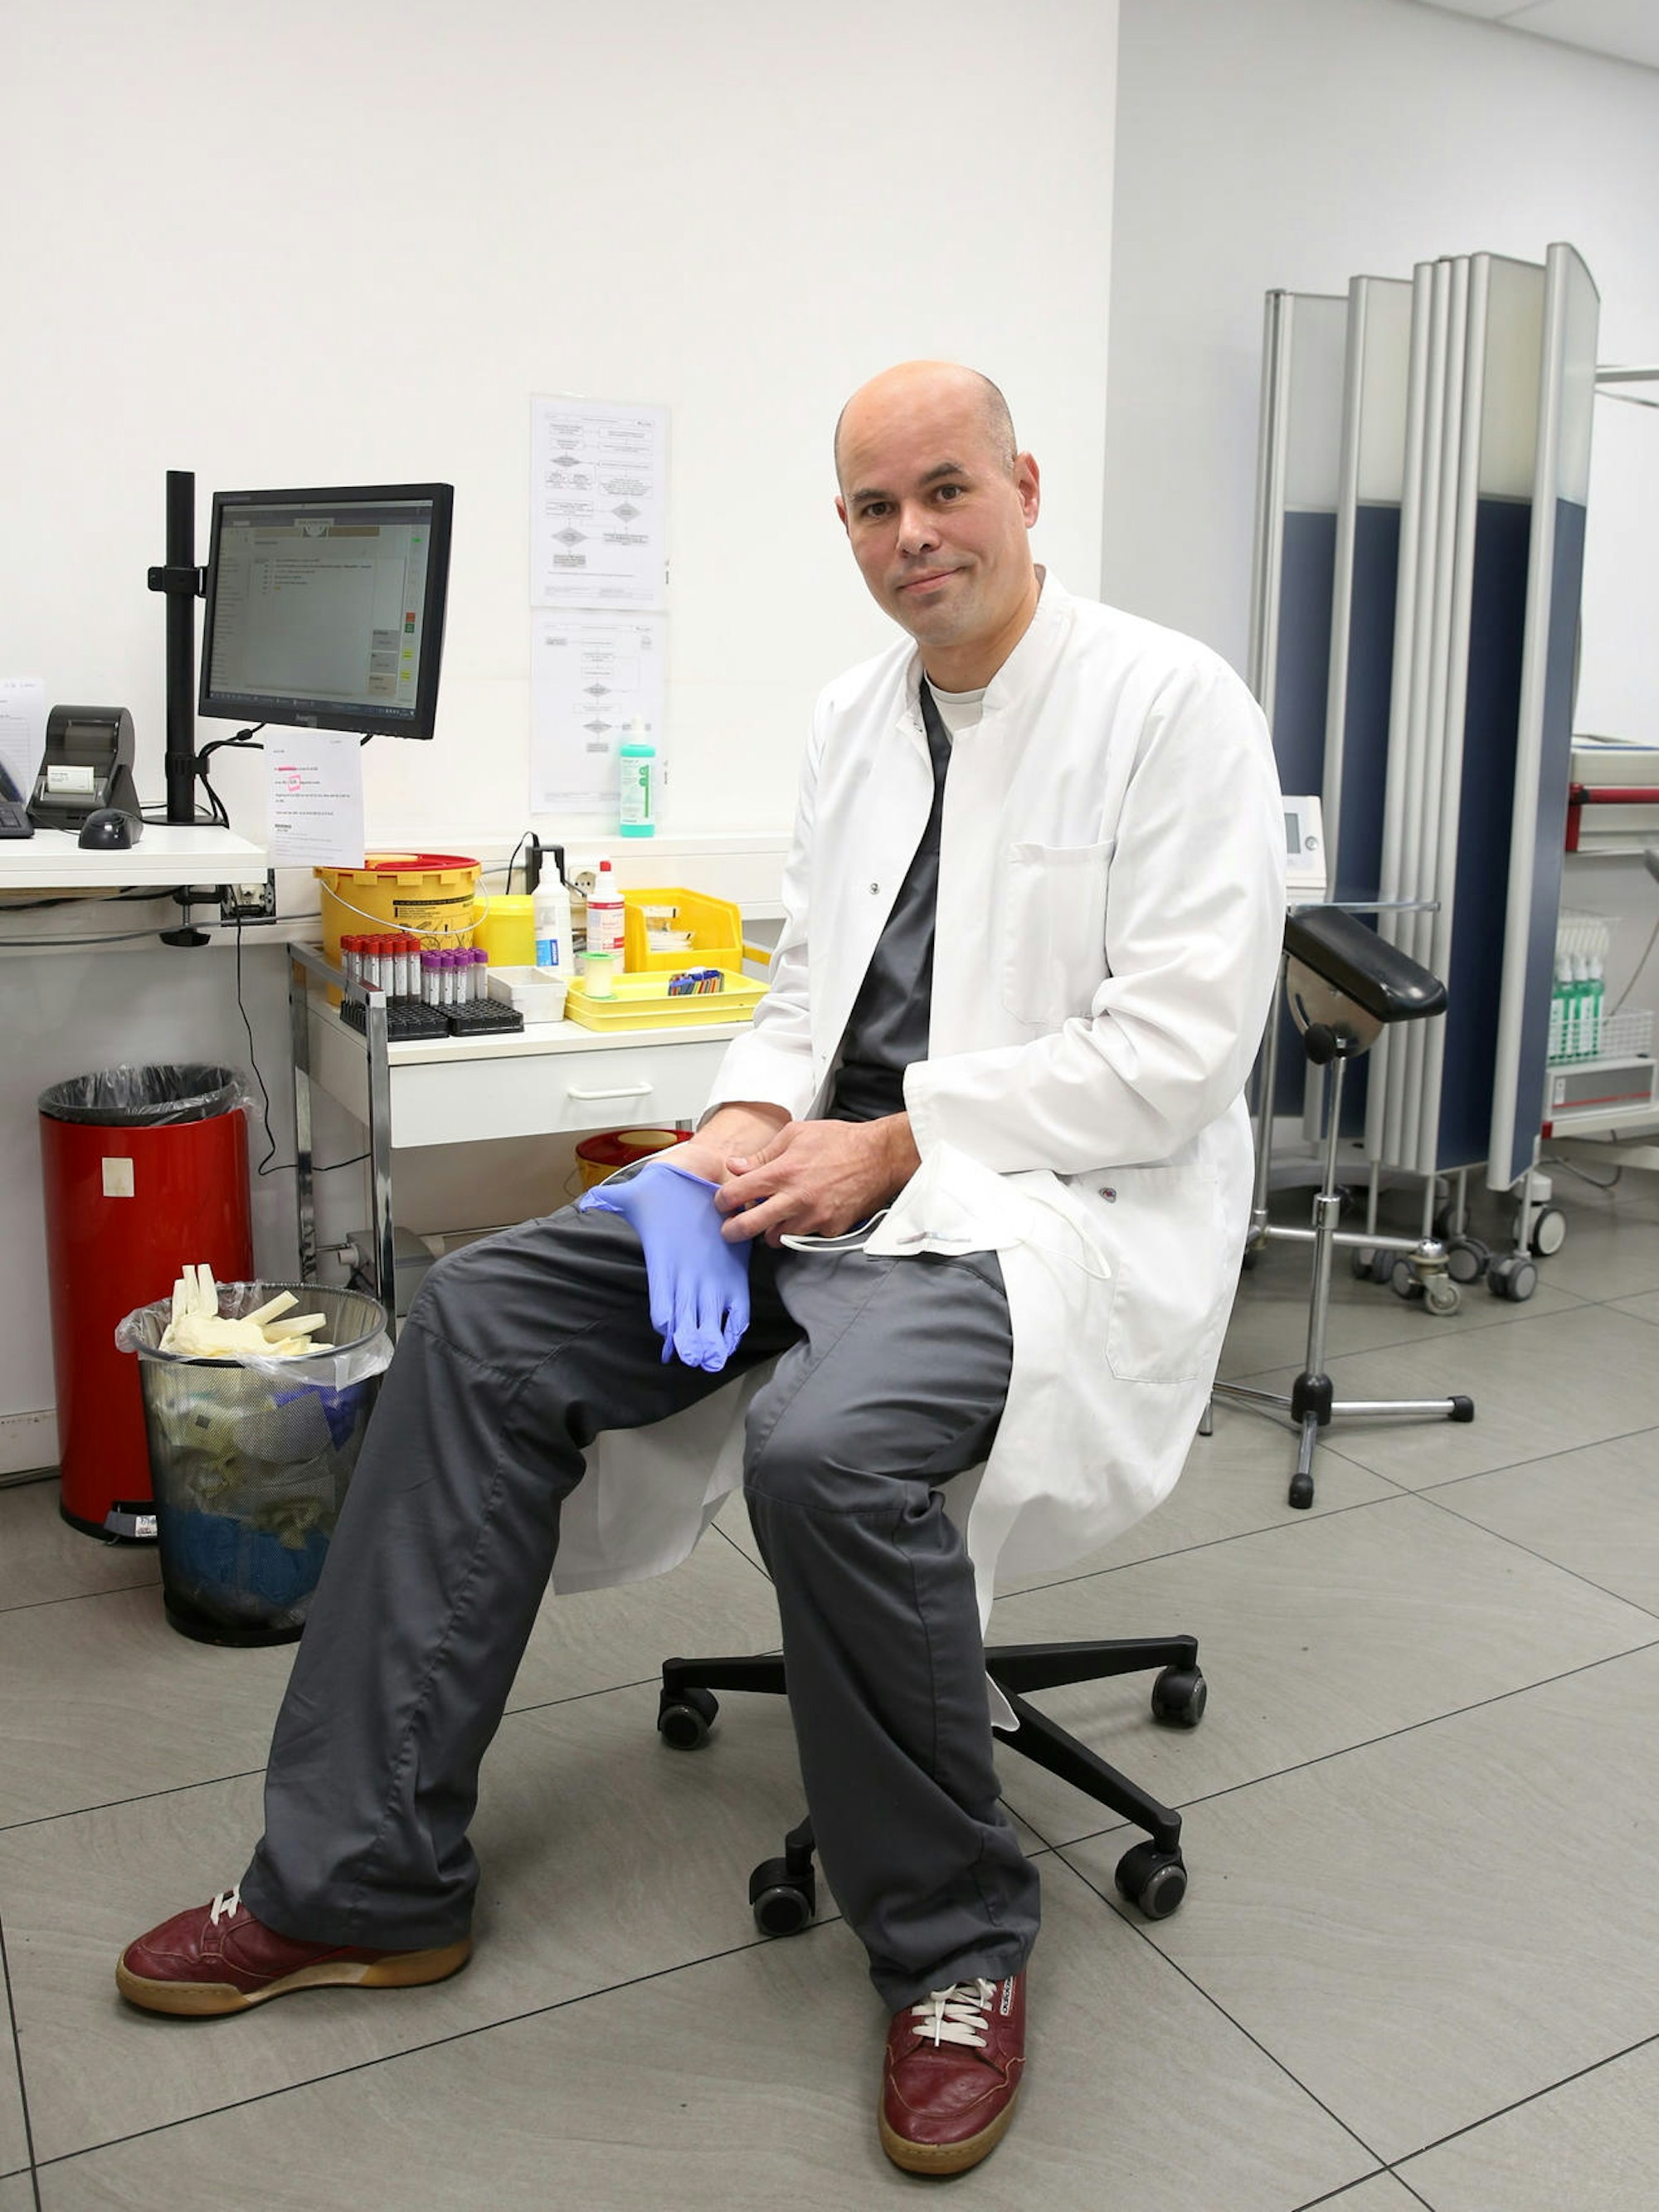 Dr. Tim Knoop